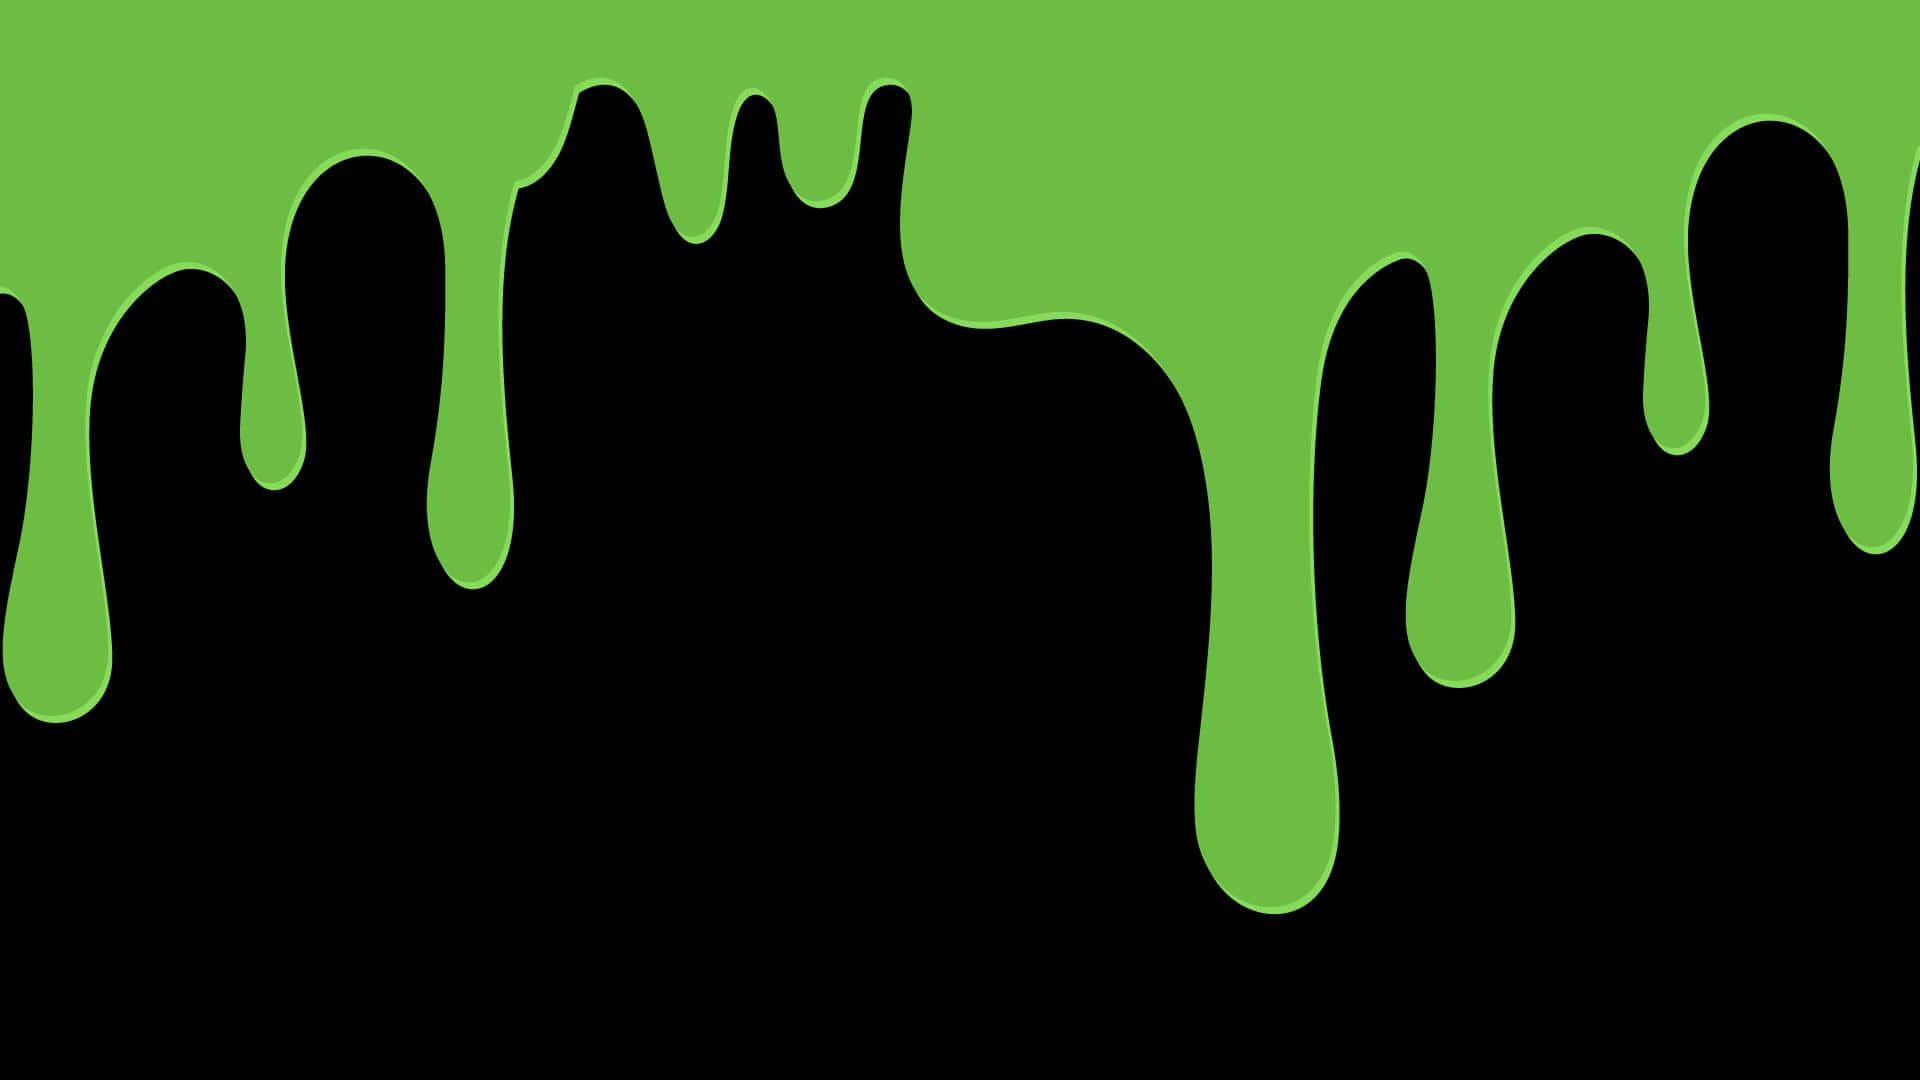 Slime Pictures | Download Free Images on Unsplash